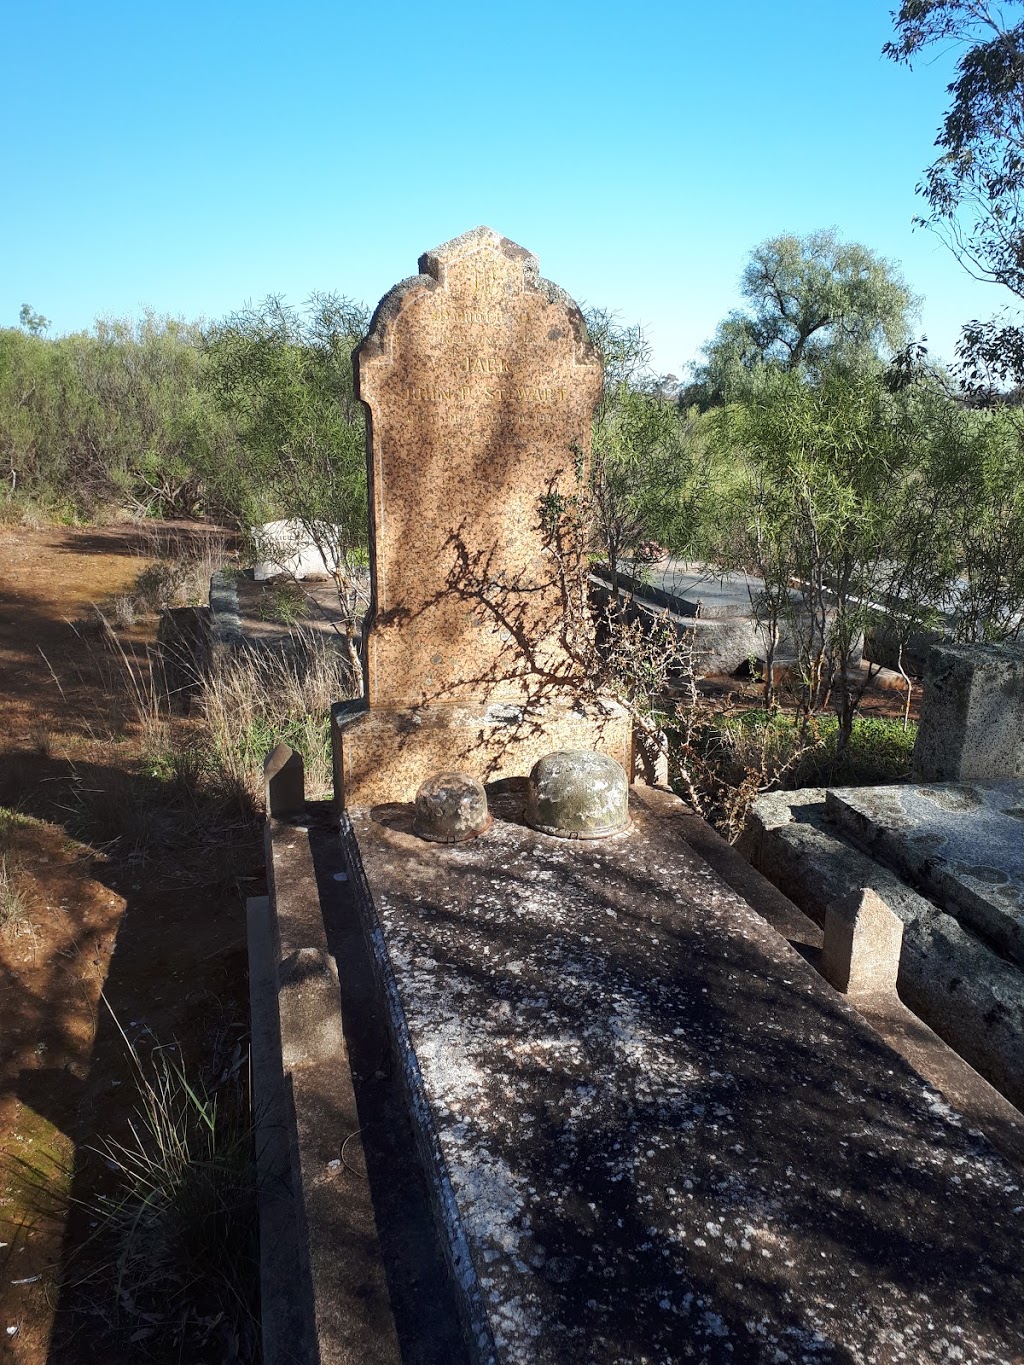 Mysia Cemetery | cemetery | Mysia VIC 3518, Australia